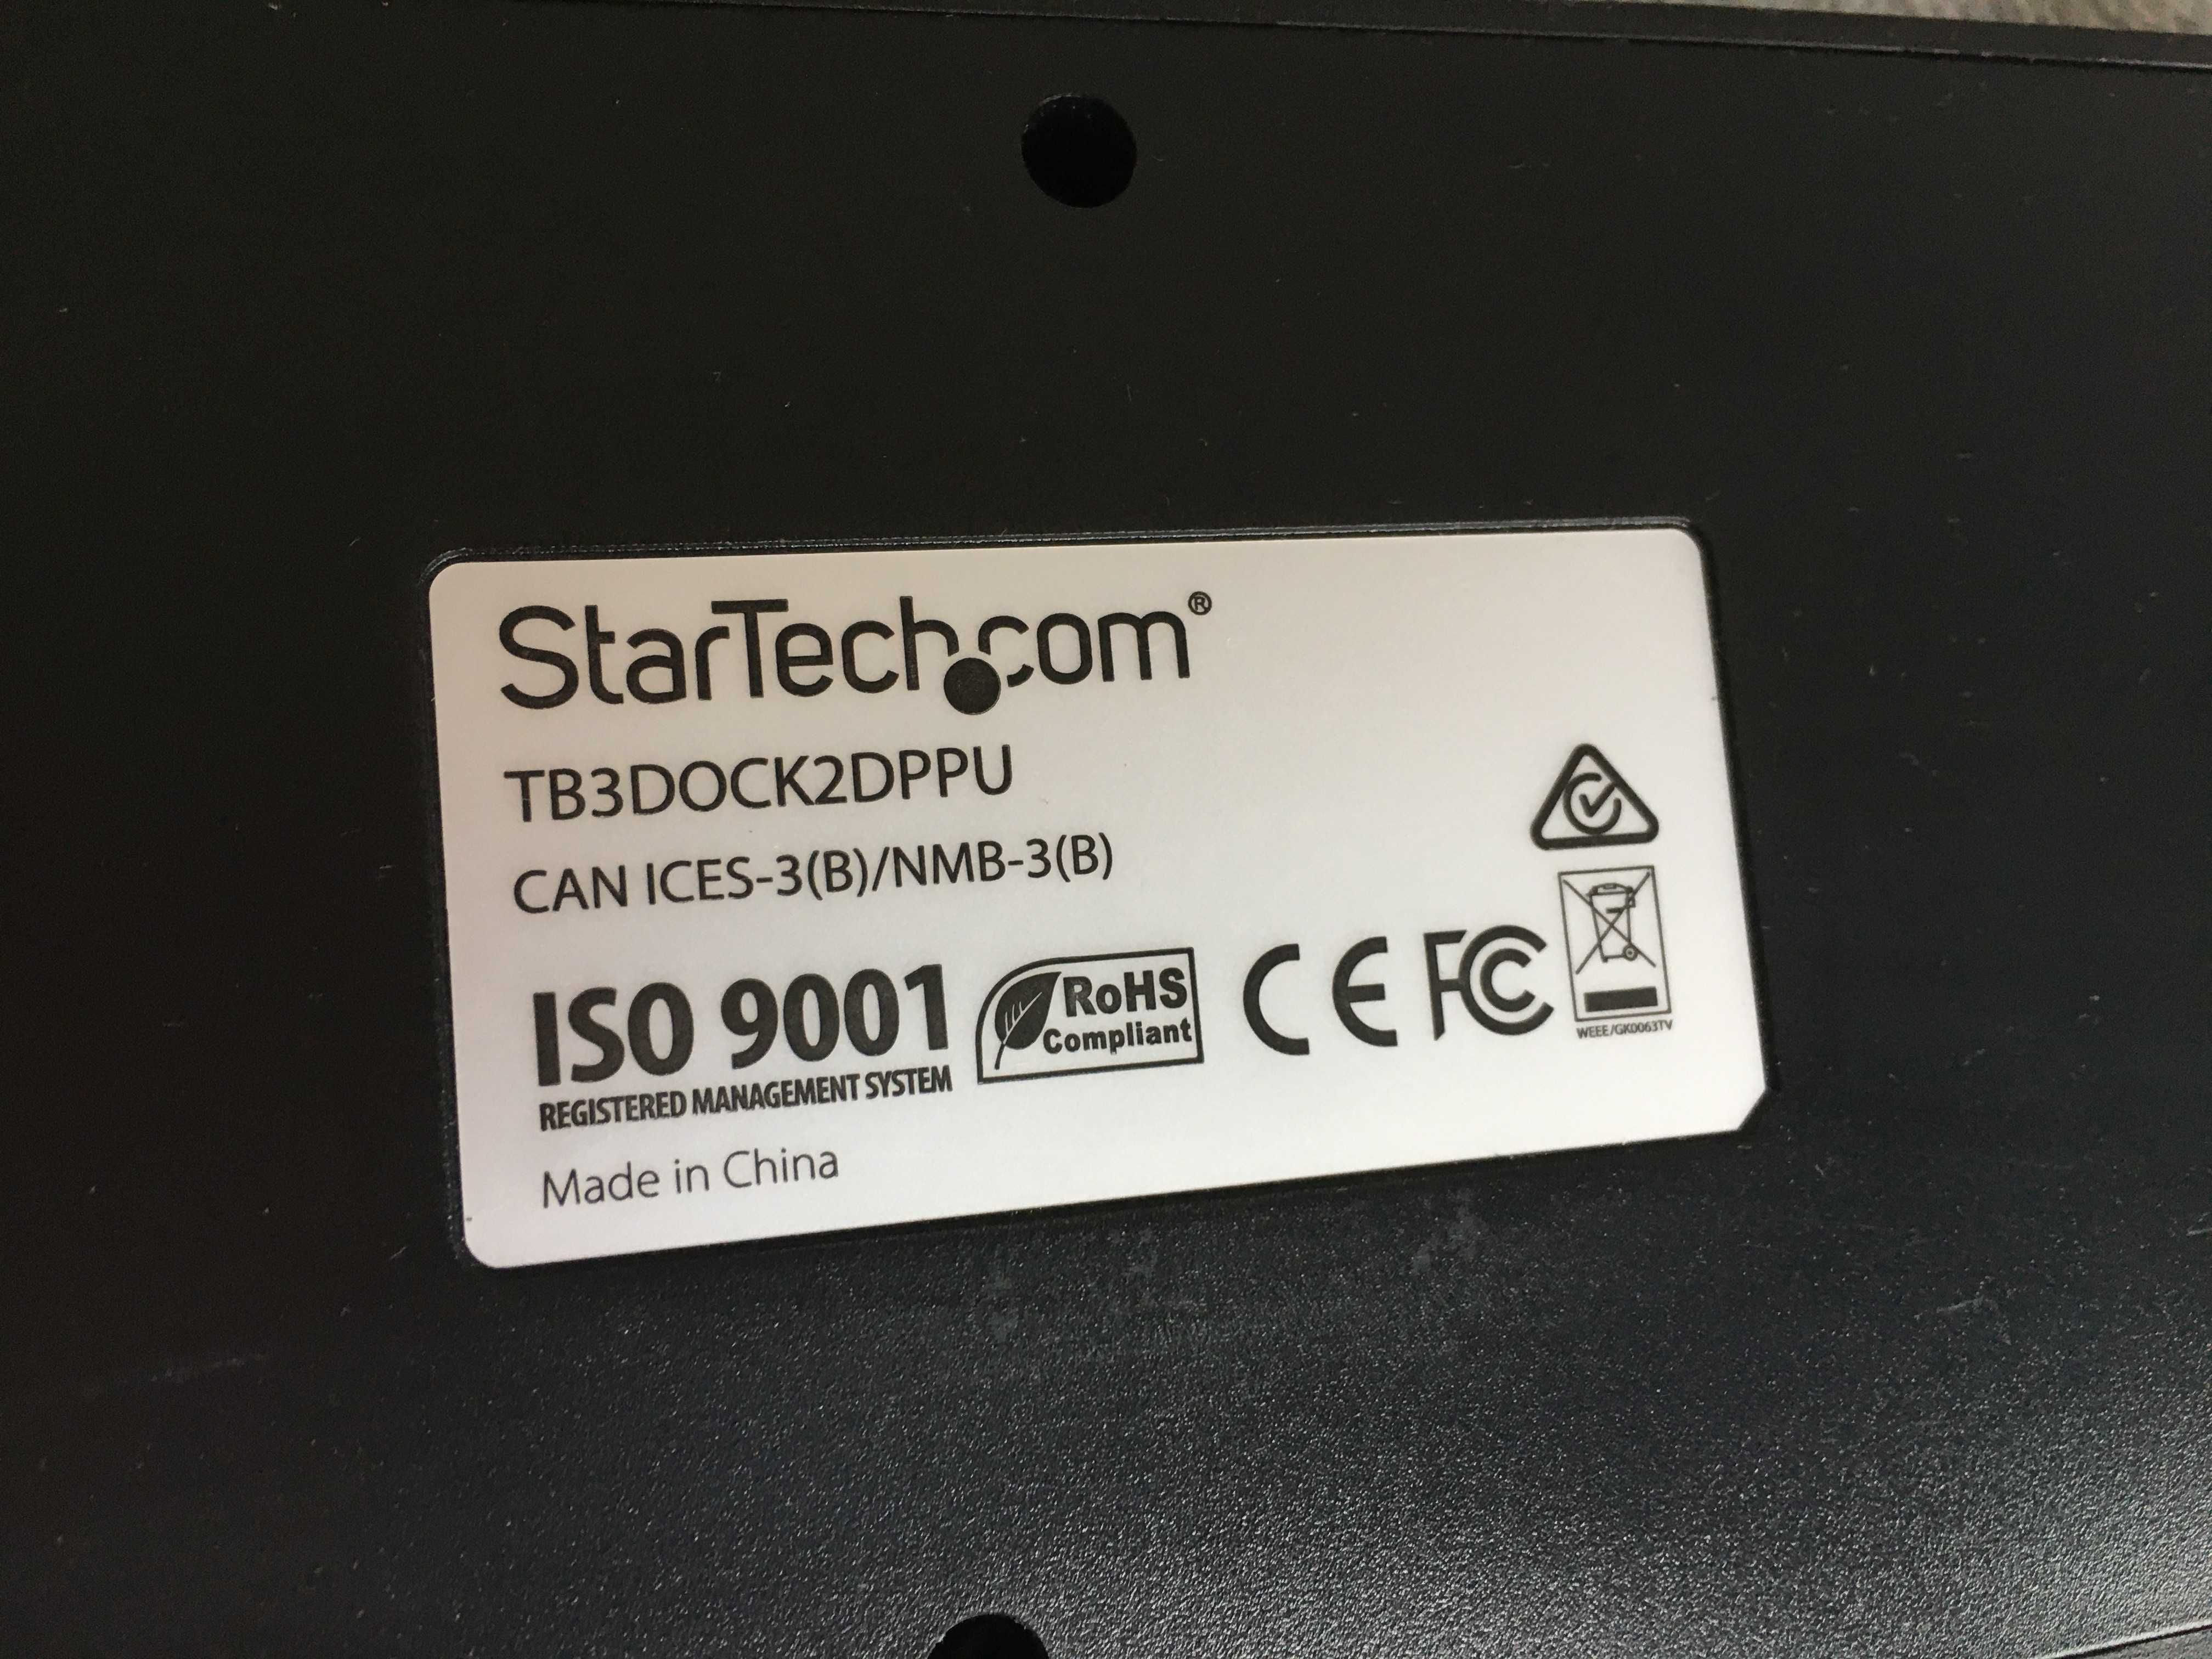 Stacja dokująca/replikator do Apple MacBook: StarTech 4K Thunderbolt 3